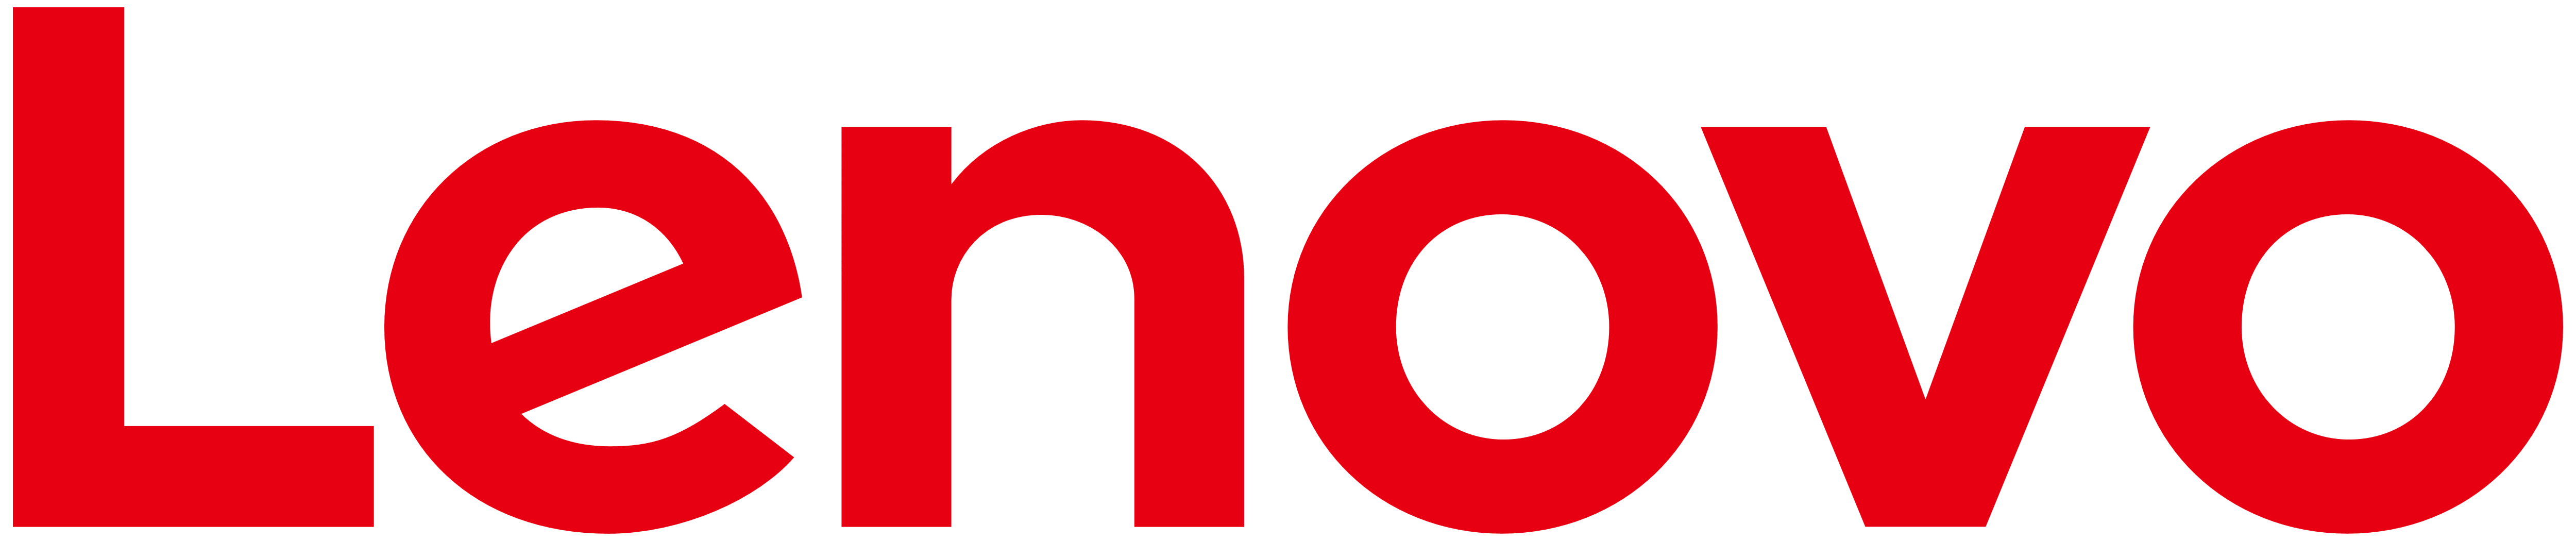 lenovo logo color